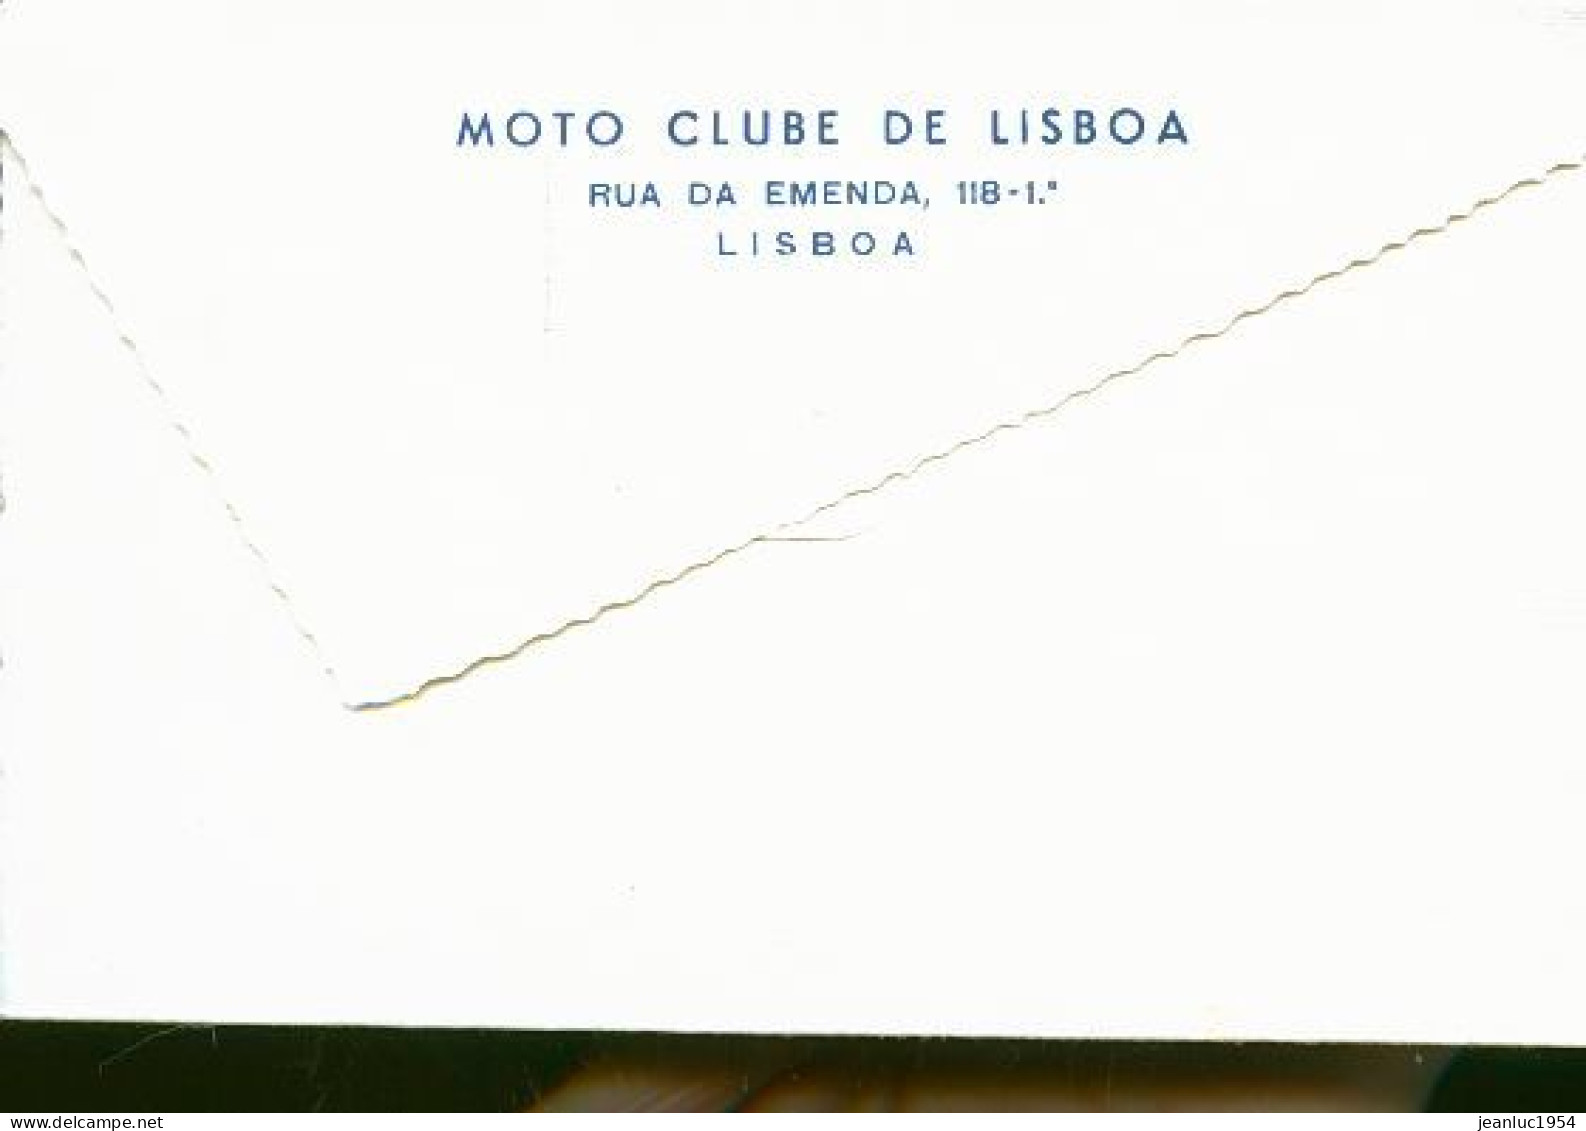 MOTO CLUBE DE LISBOA - Motorbikes